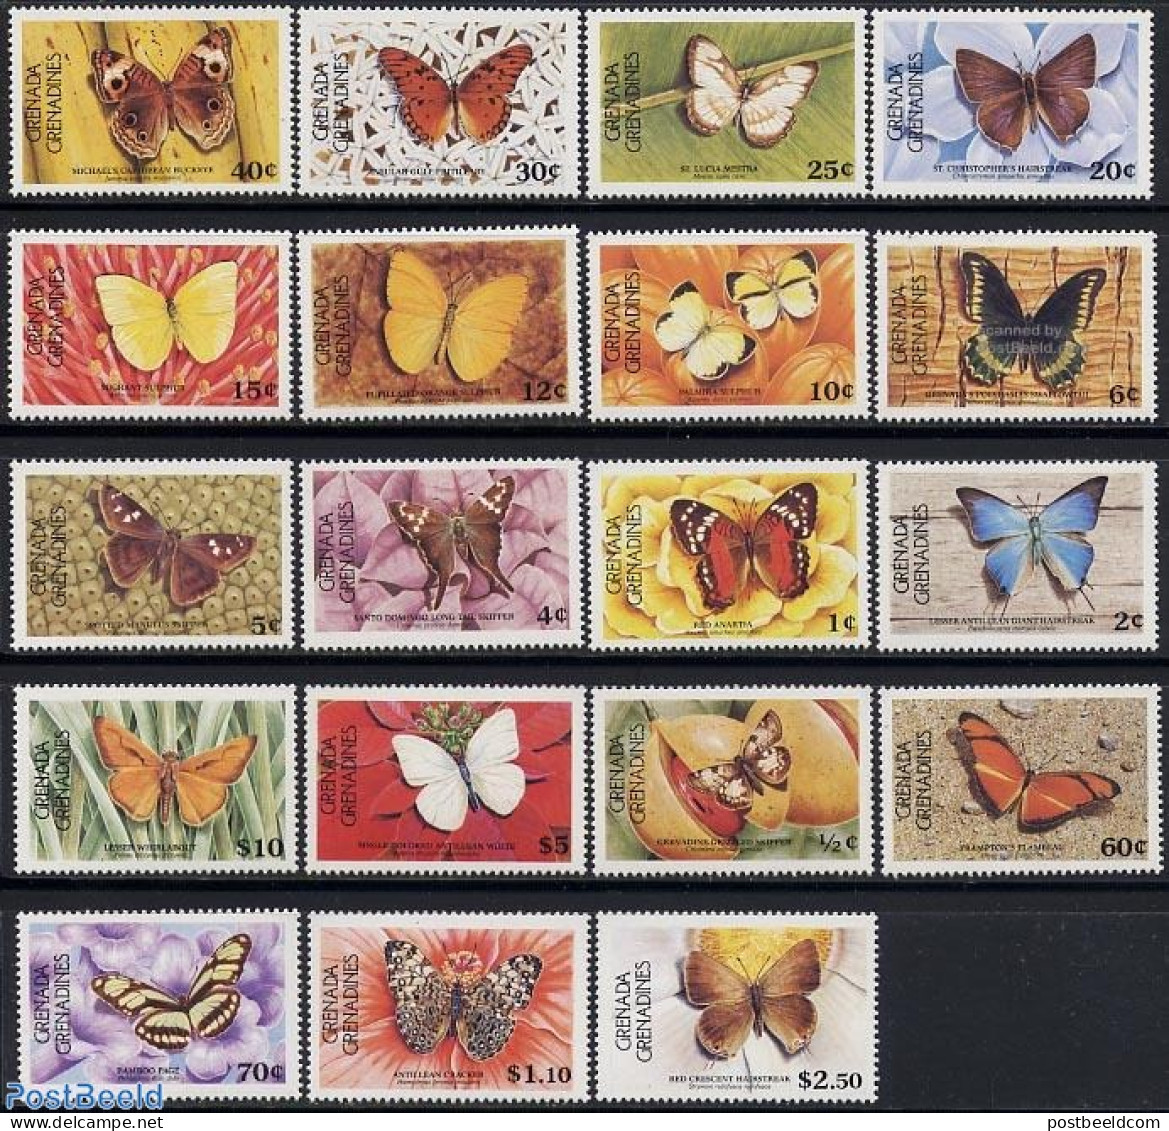 Grenada Grenadines 1985 Definitives 19v, Butterflies, Mint NH, Nature - Butterflies - Grenada (1974-...)